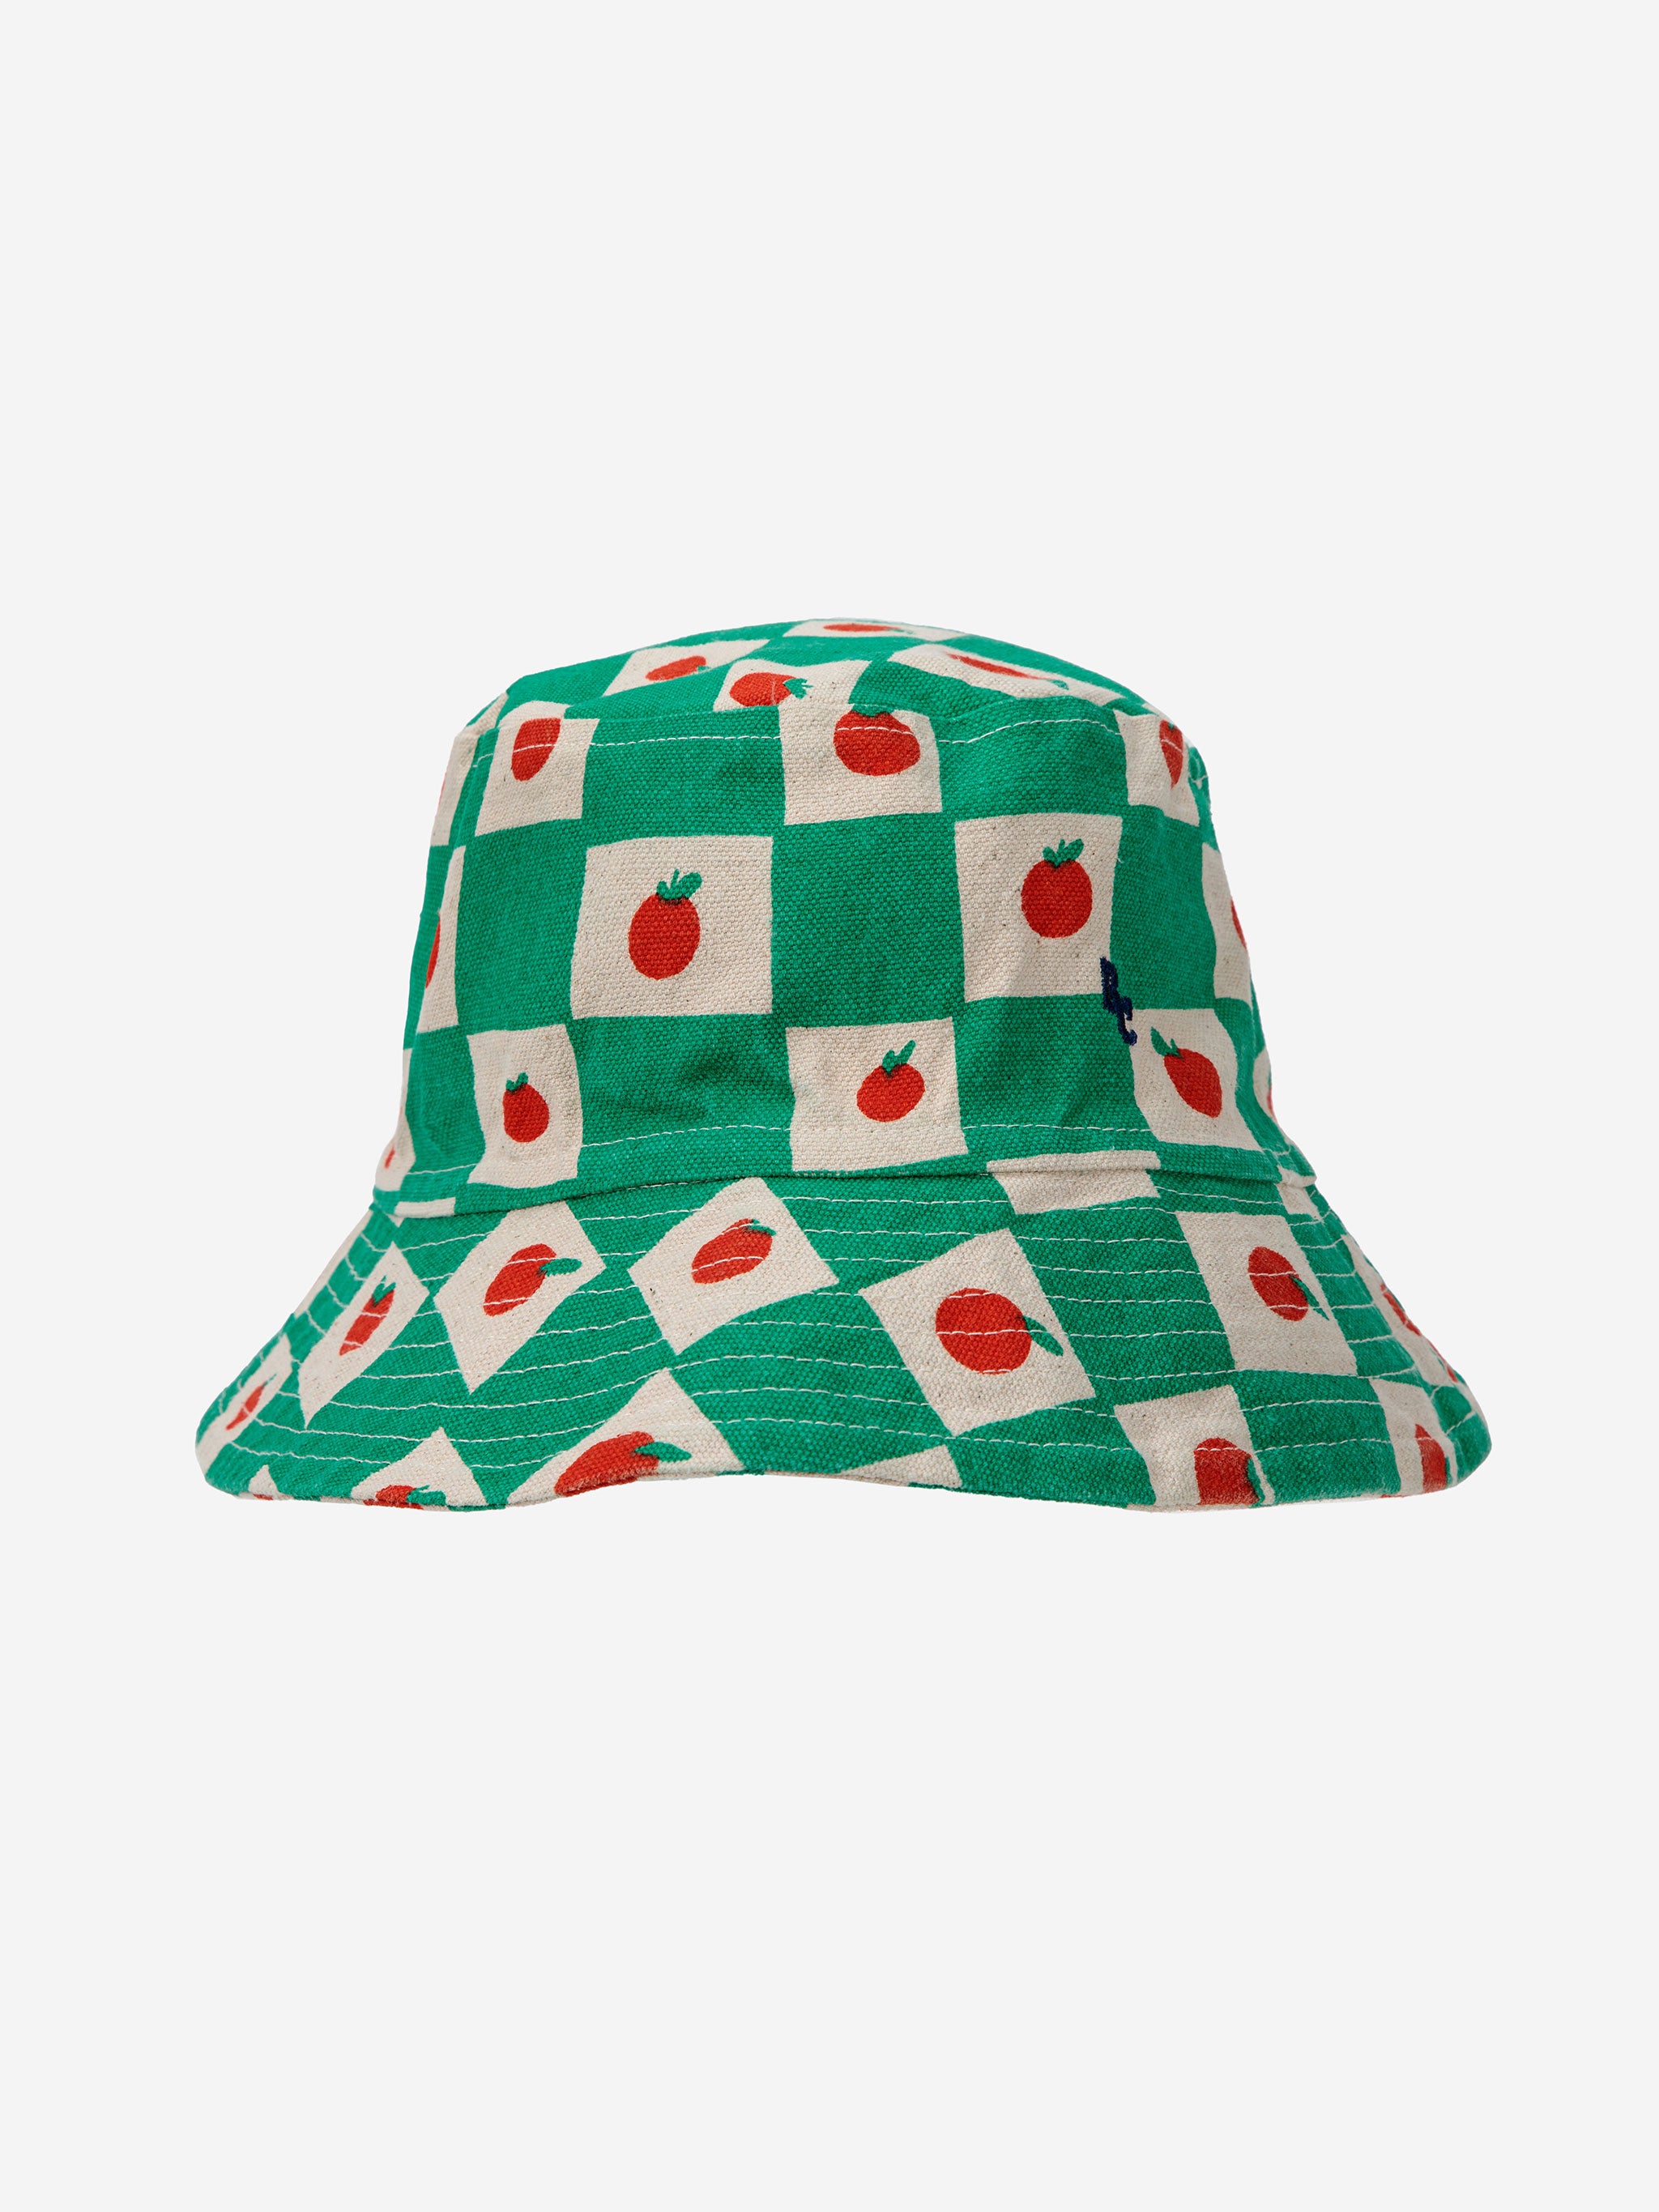 Bobo Choses woven-raffia bucket hat - Neutrals